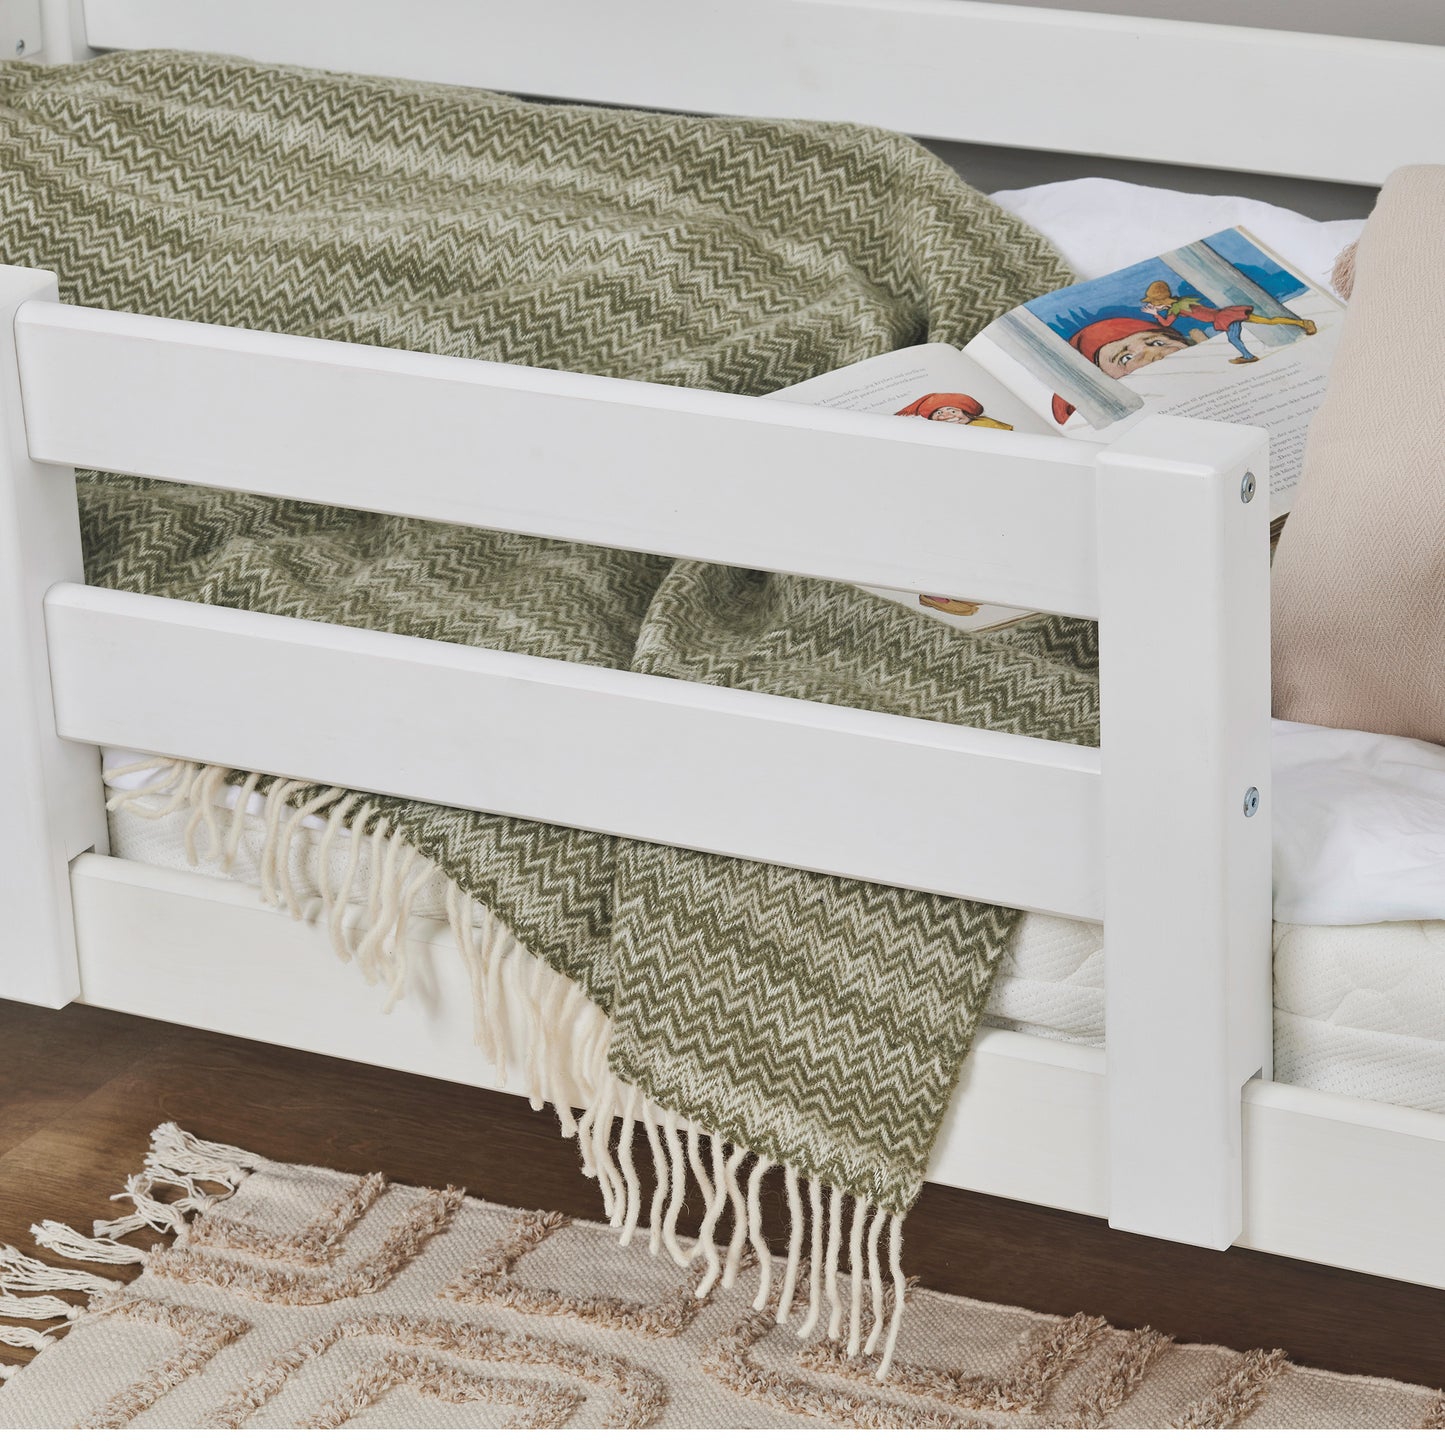 Hoppekids ECO Luxury Junior bed with 1/2 bed rail